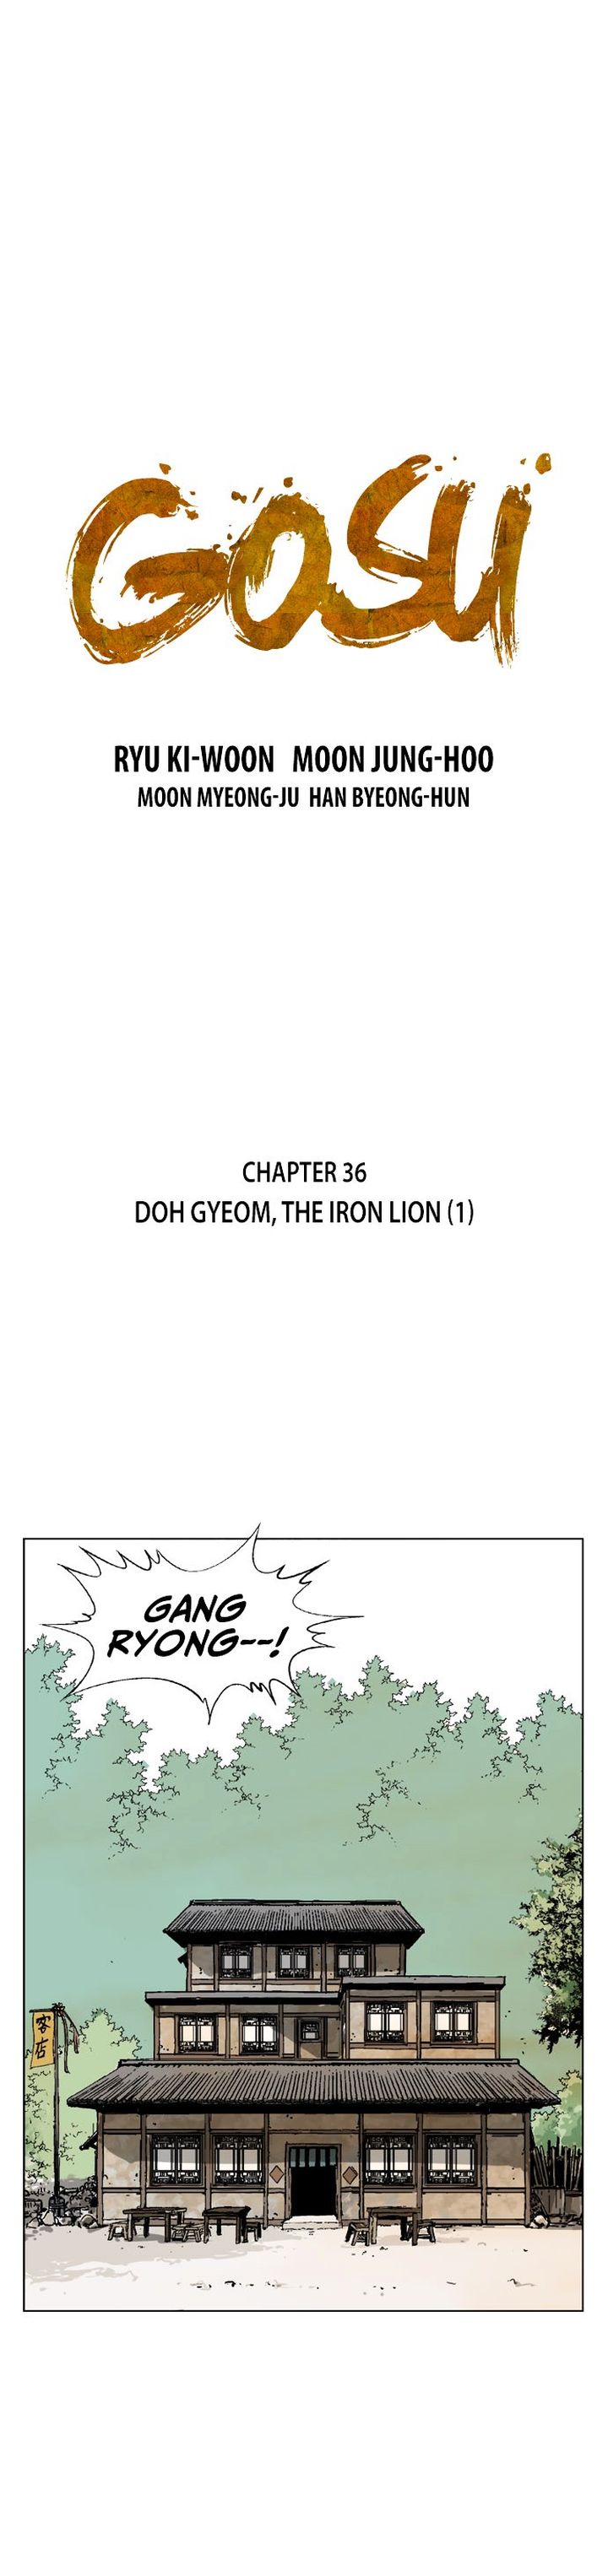 Gosu Chapter 36 Page 1